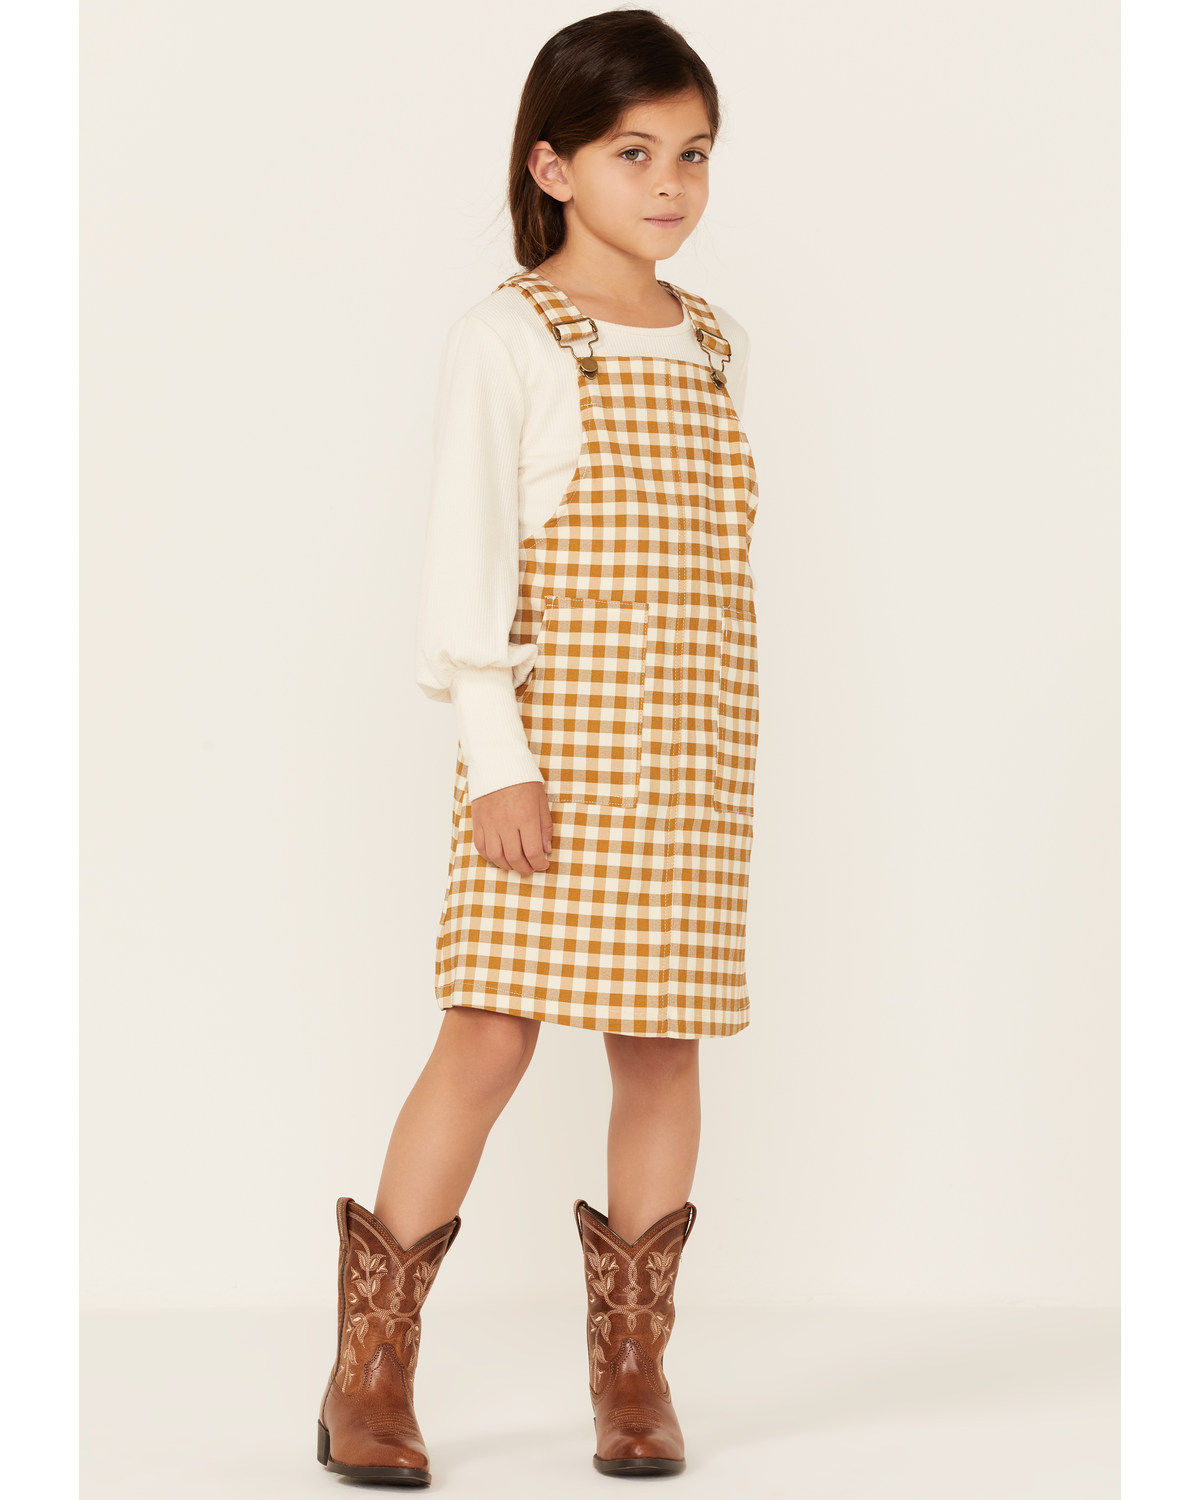 Hayden Girls' Checkered Overall Dress